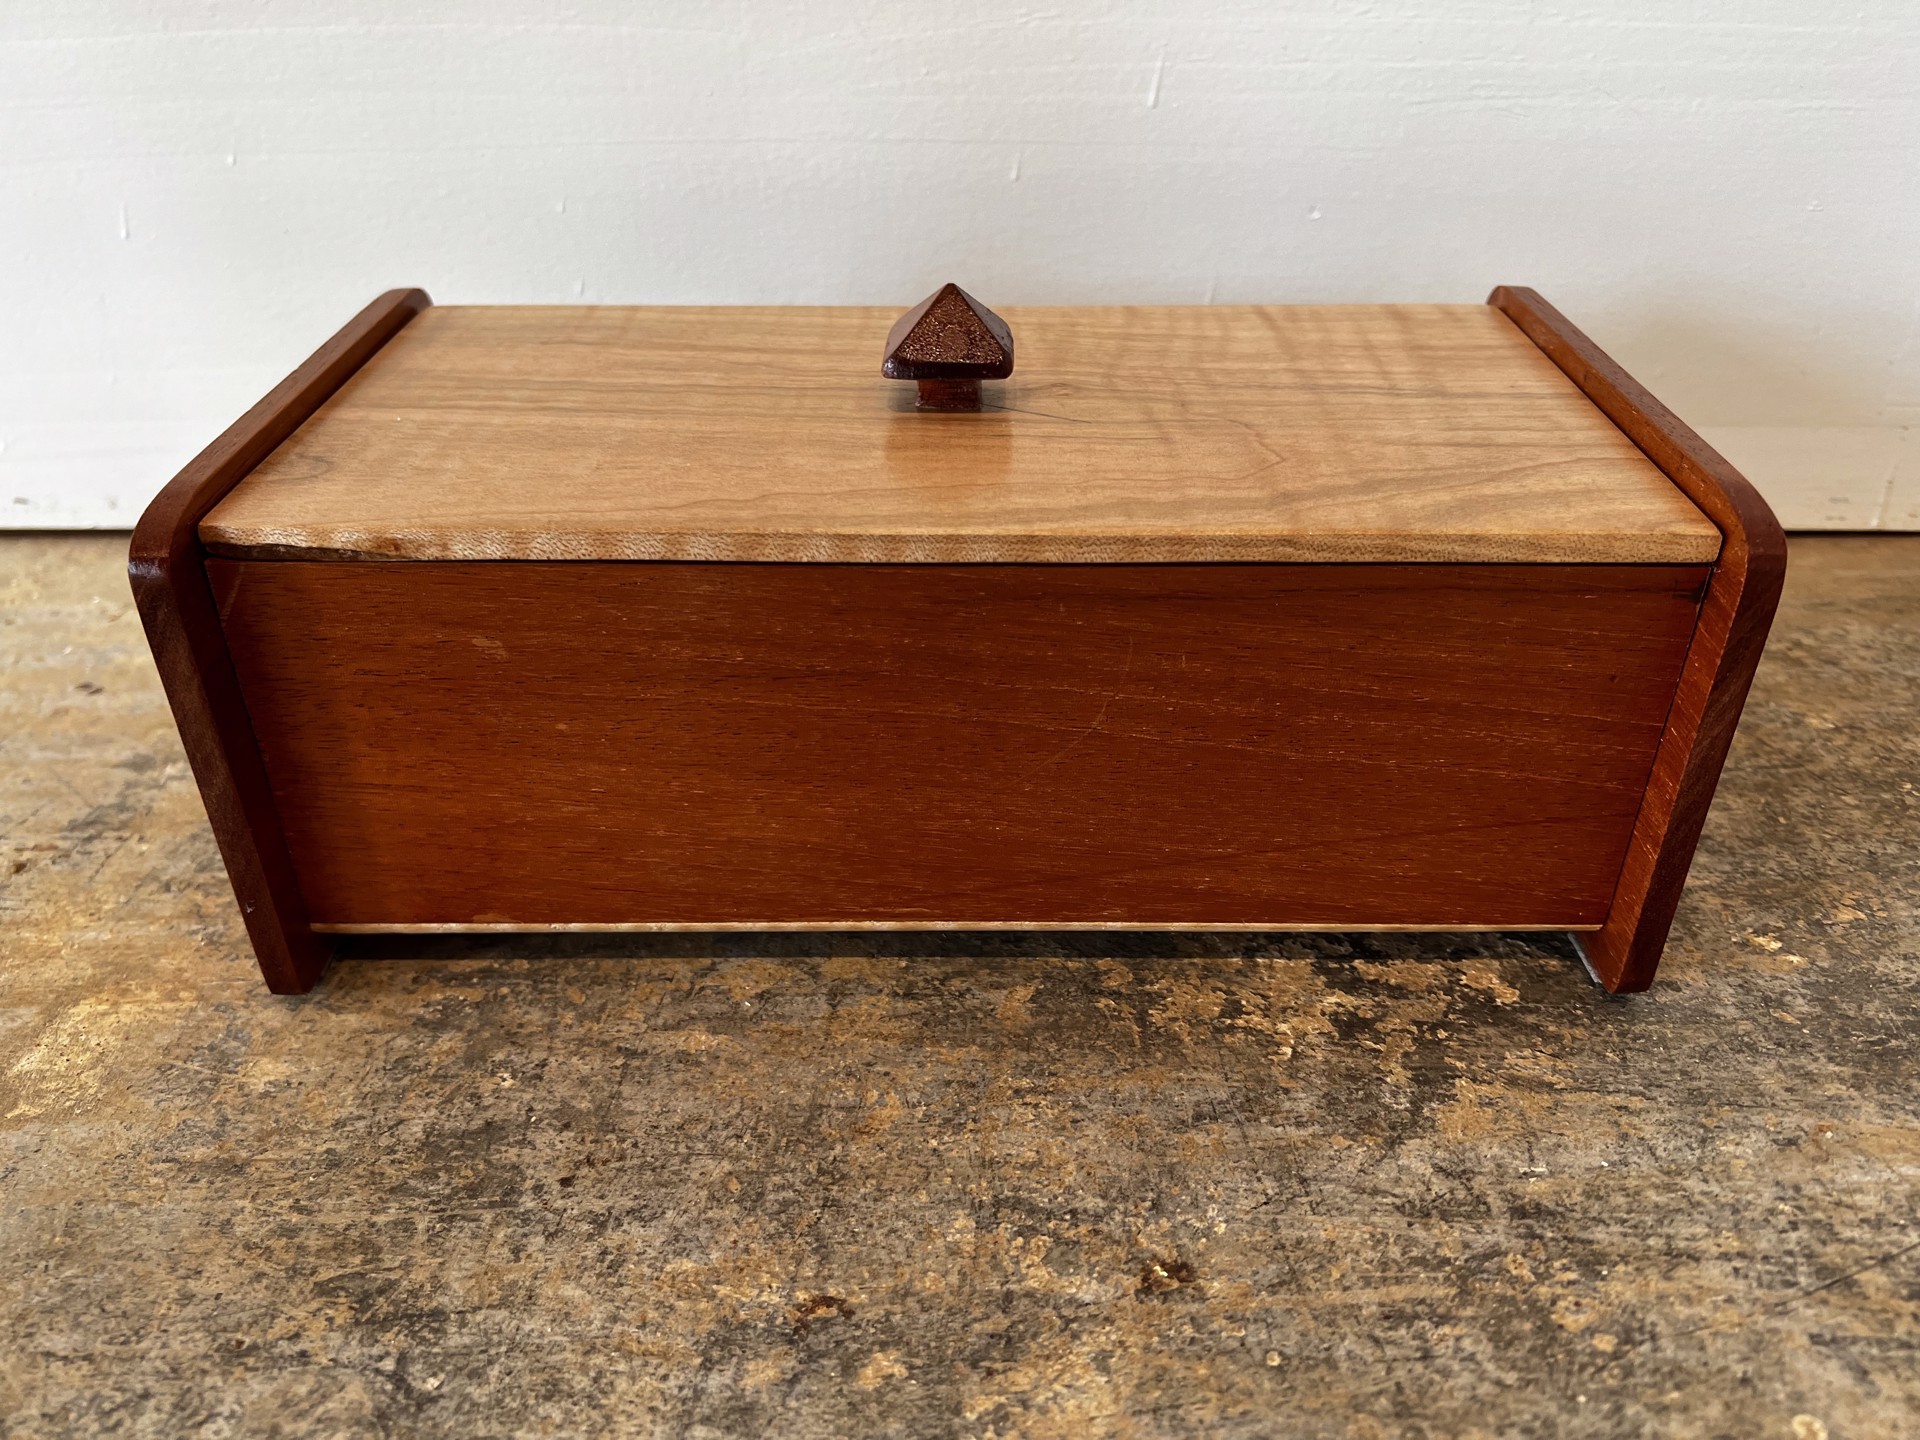 Handmade Wooden Box 3 by William Dunaway